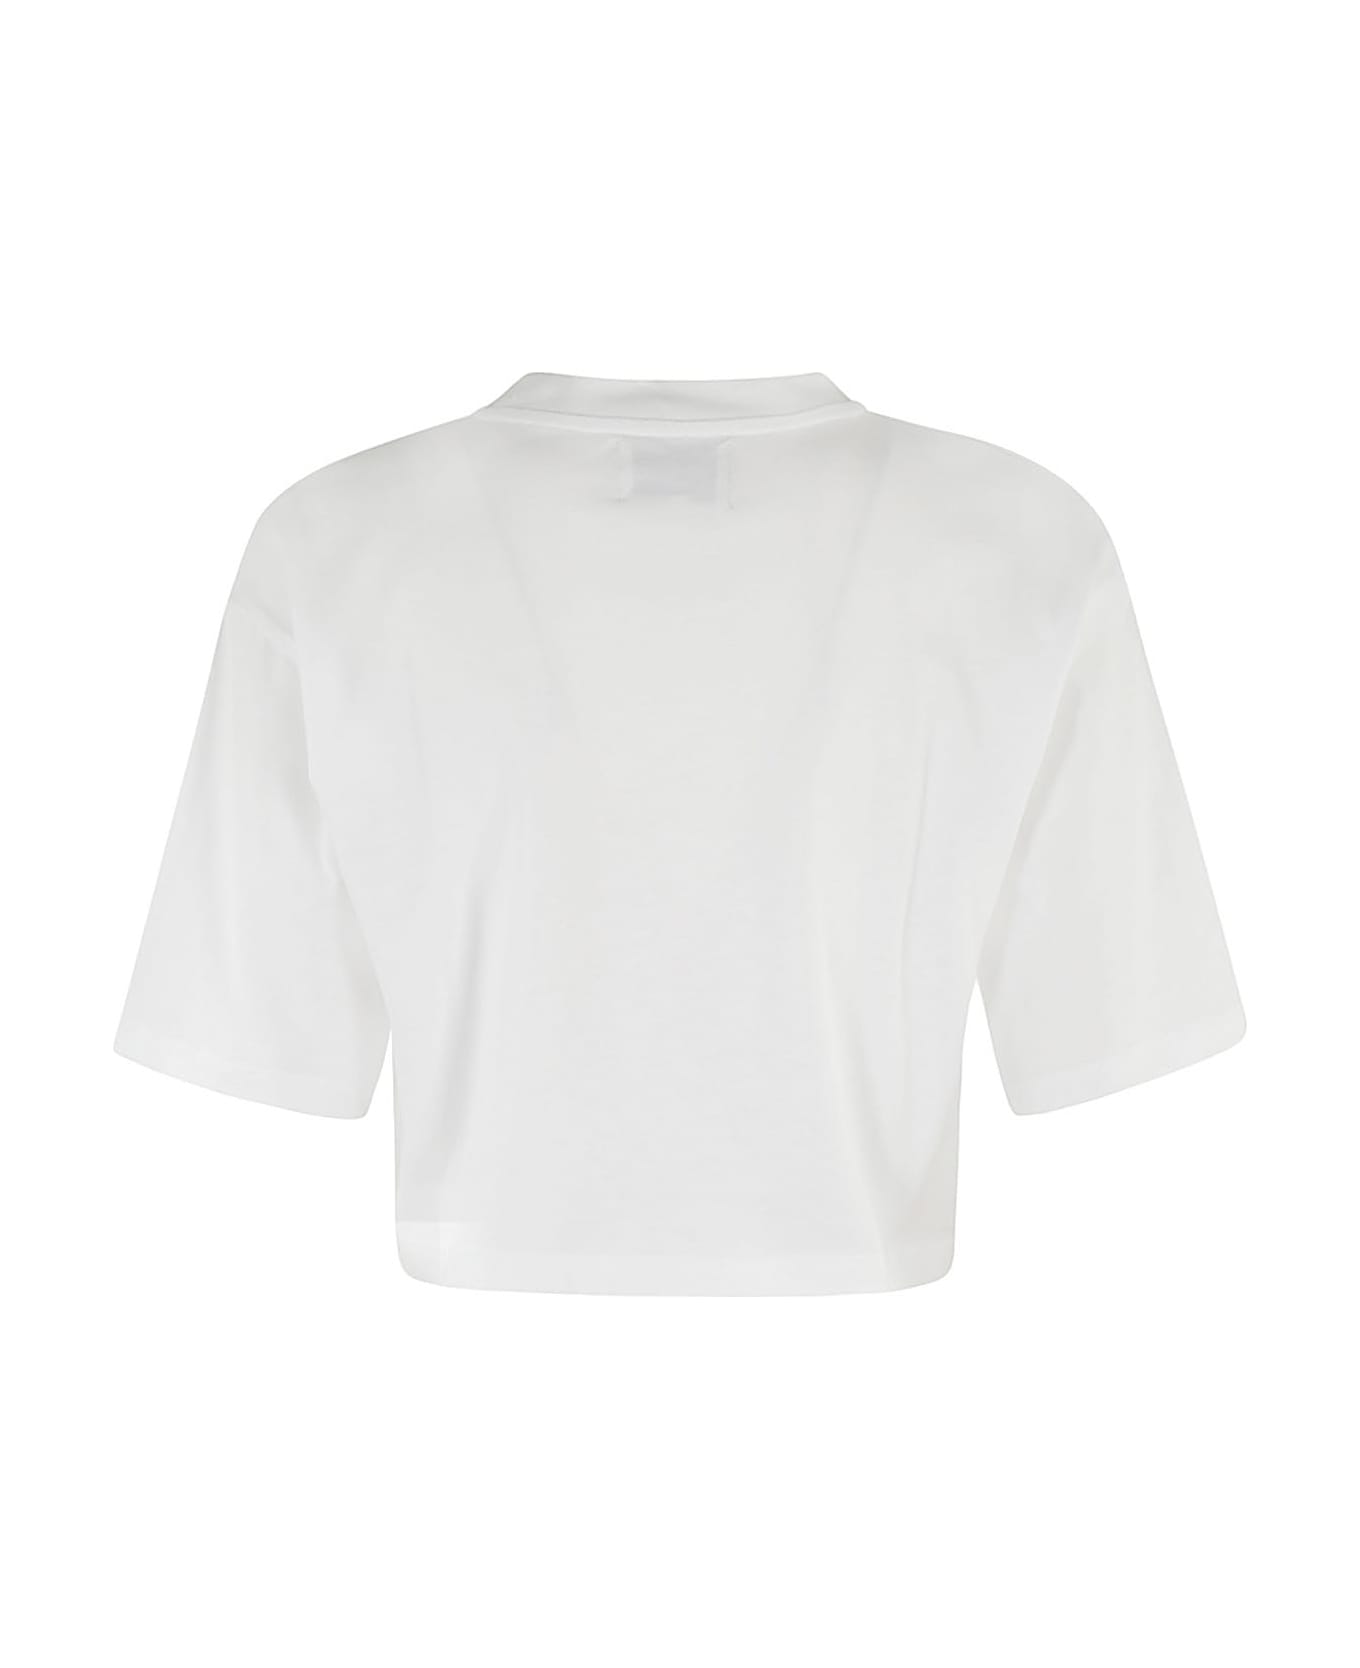 Loulou Studio Cropped Tshirt - White Tシャツ